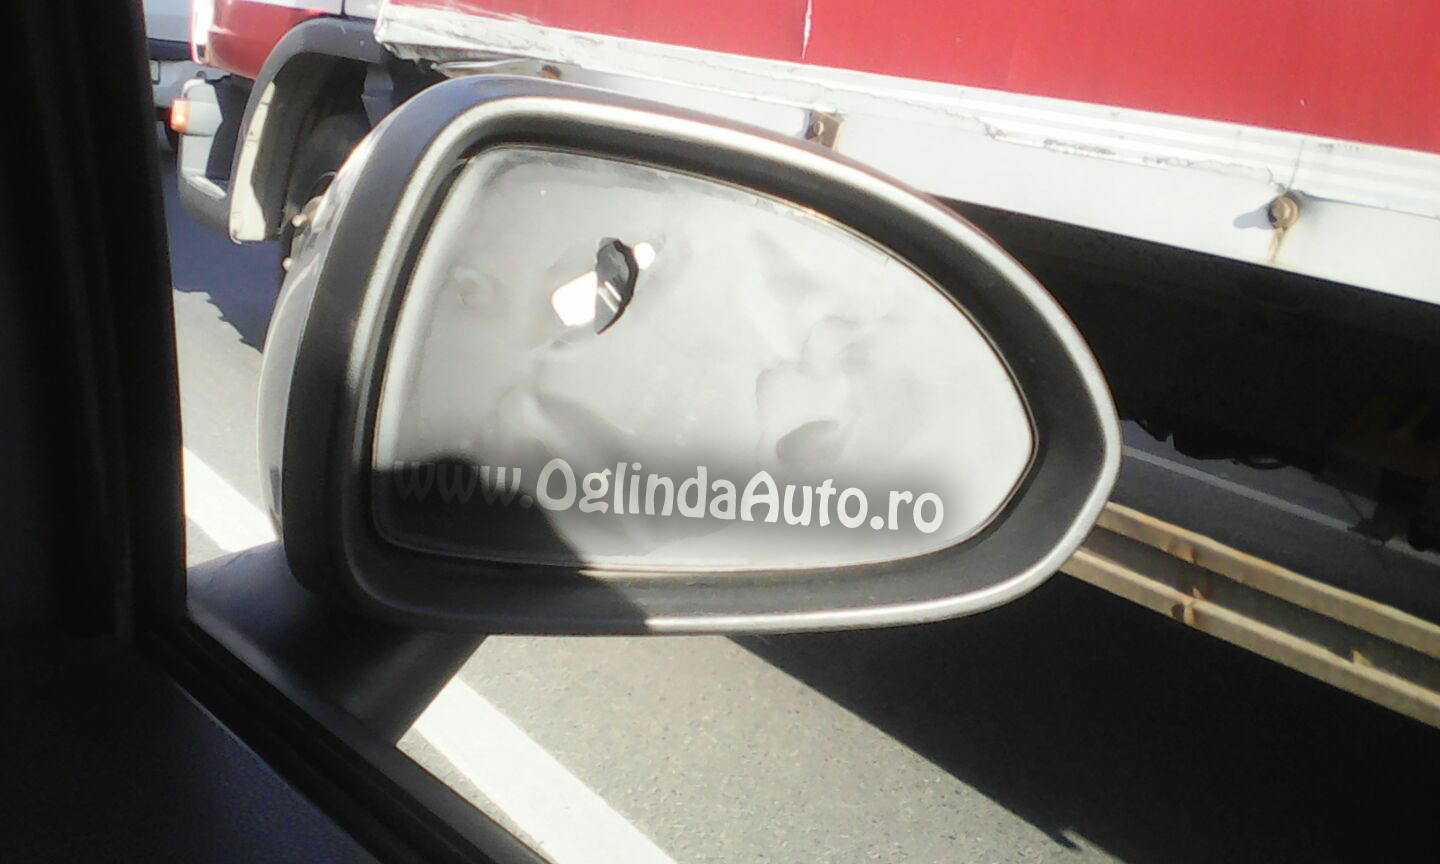 Montarea demontarea unei oglinzi auto